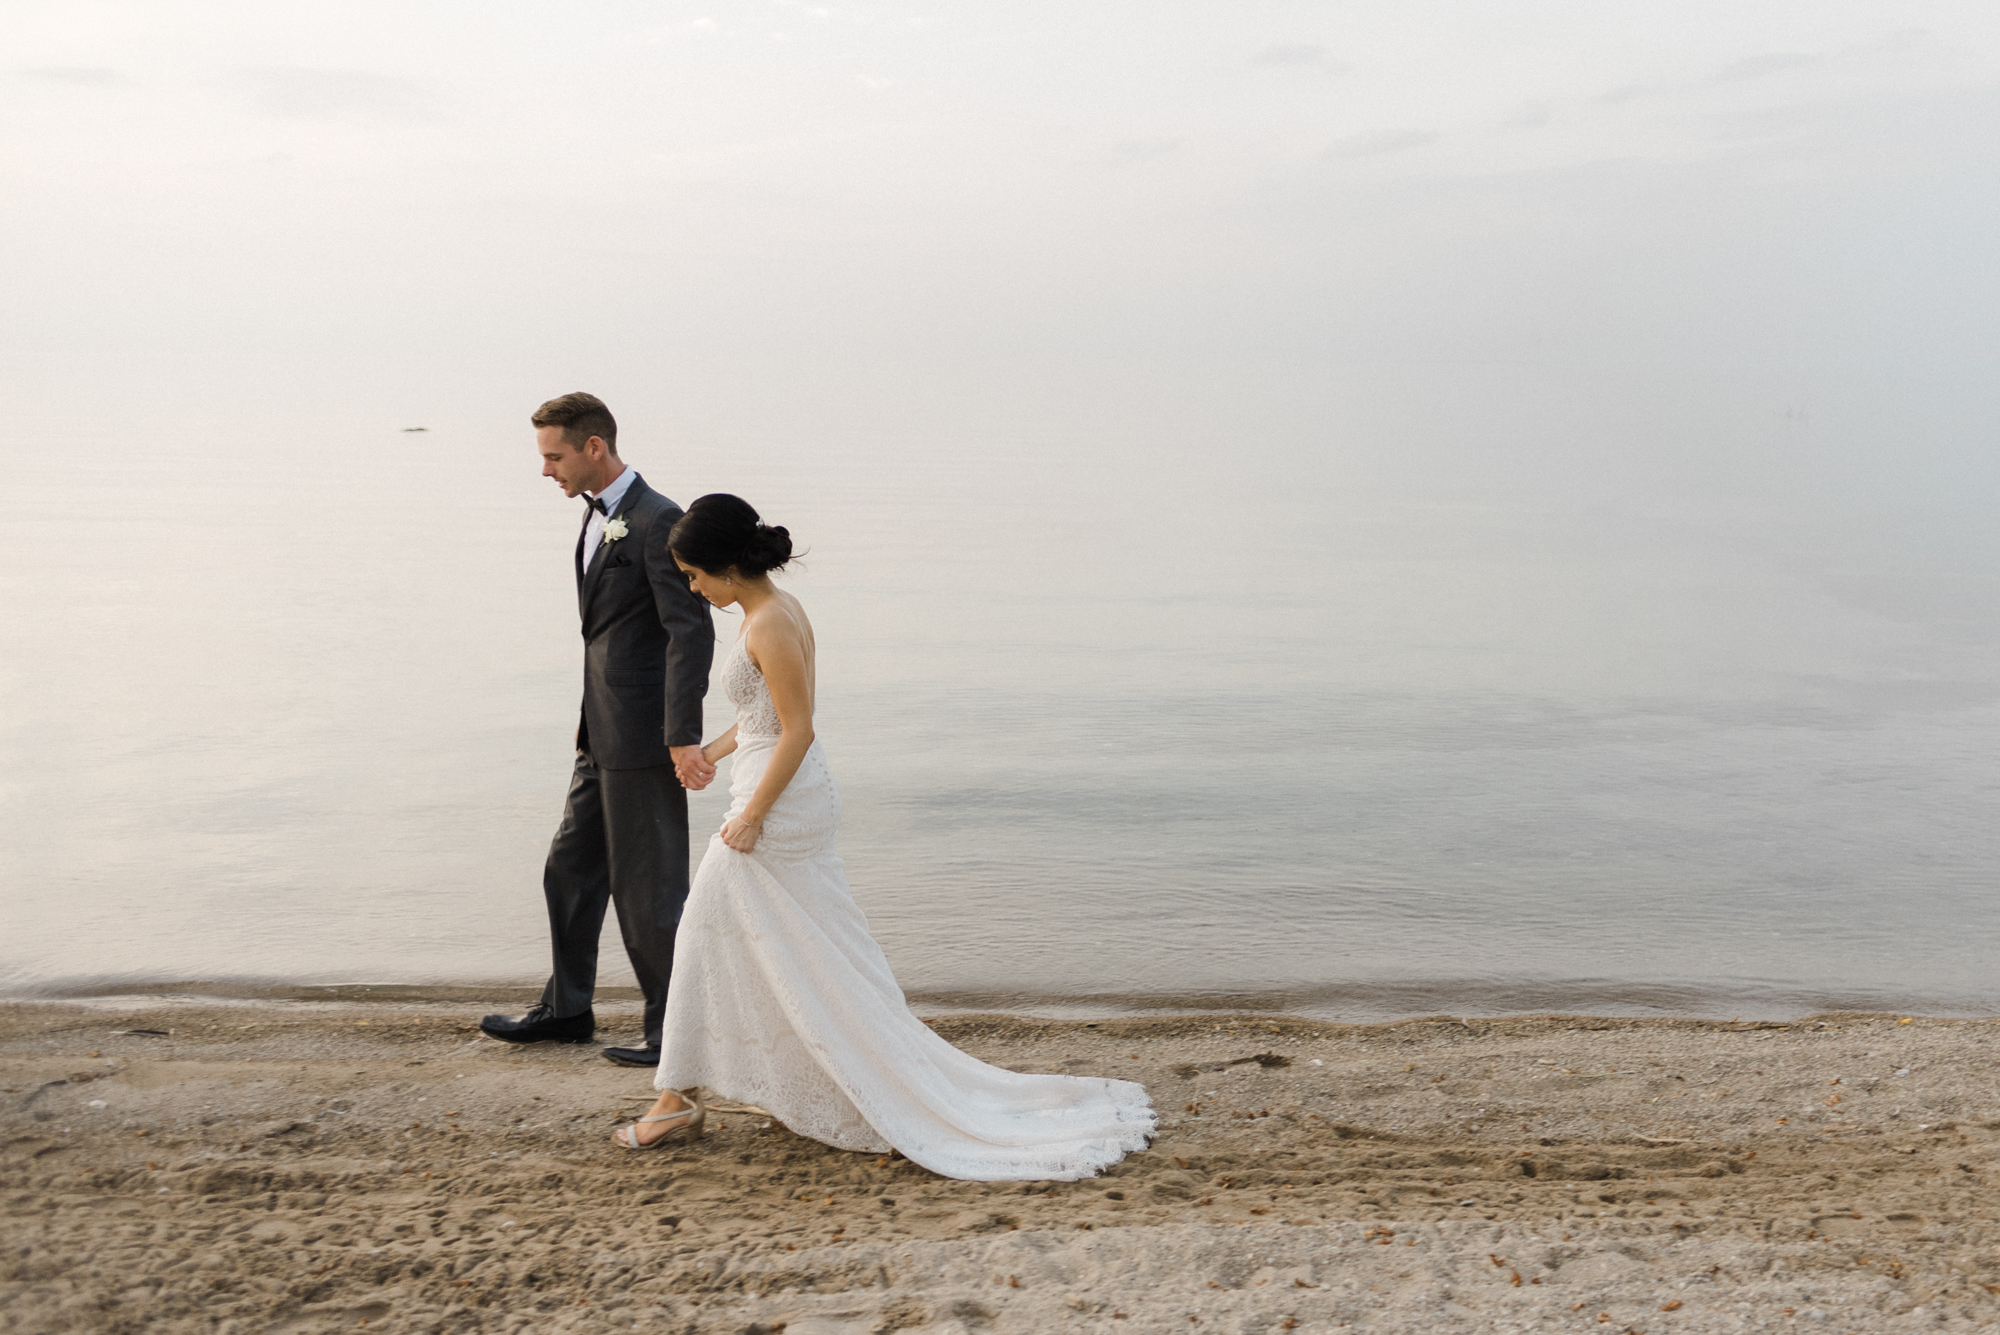 Wedding along the beach on Georgian Bay in Collingwood